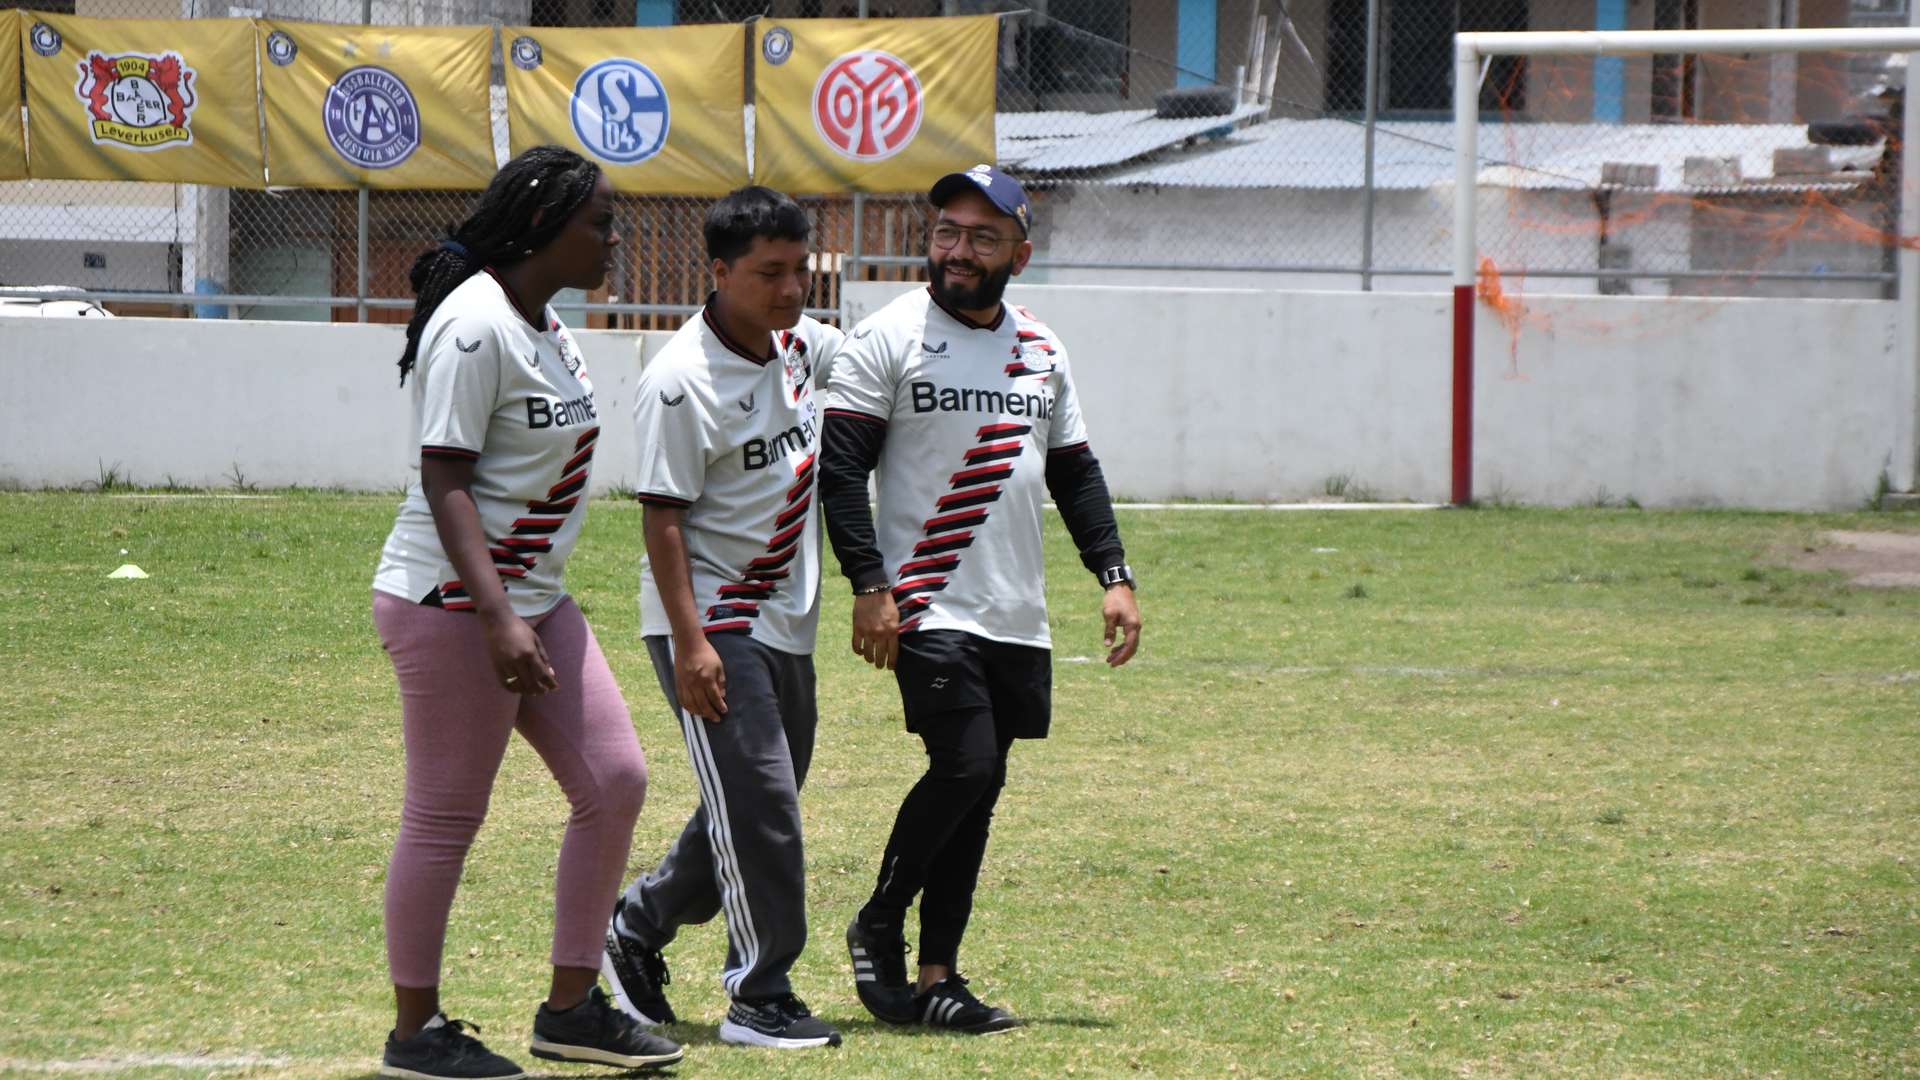 Football Club Social Alliance in Ecuador